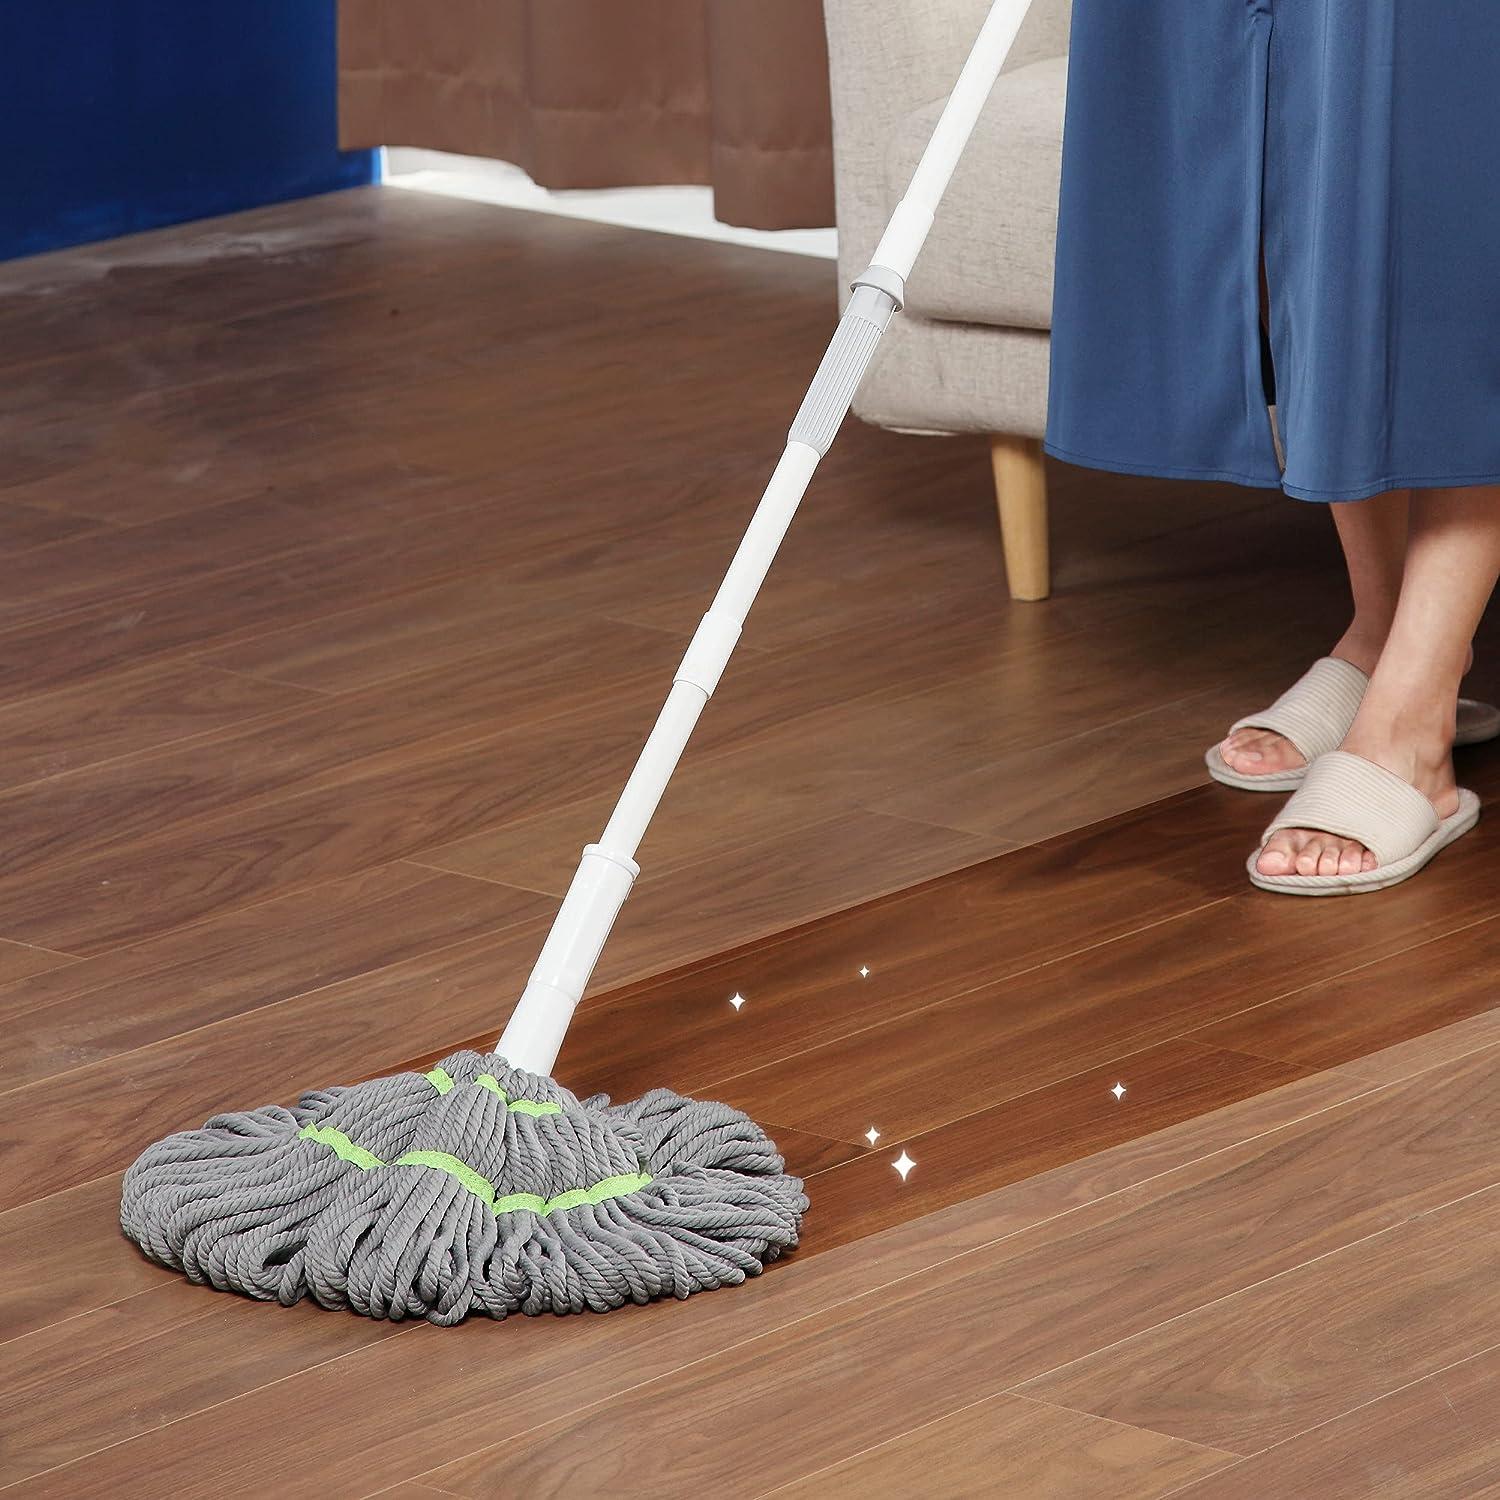 BOOMJOY Twist Mop, Self-Wringing Wet Mop for Floor Cleaning